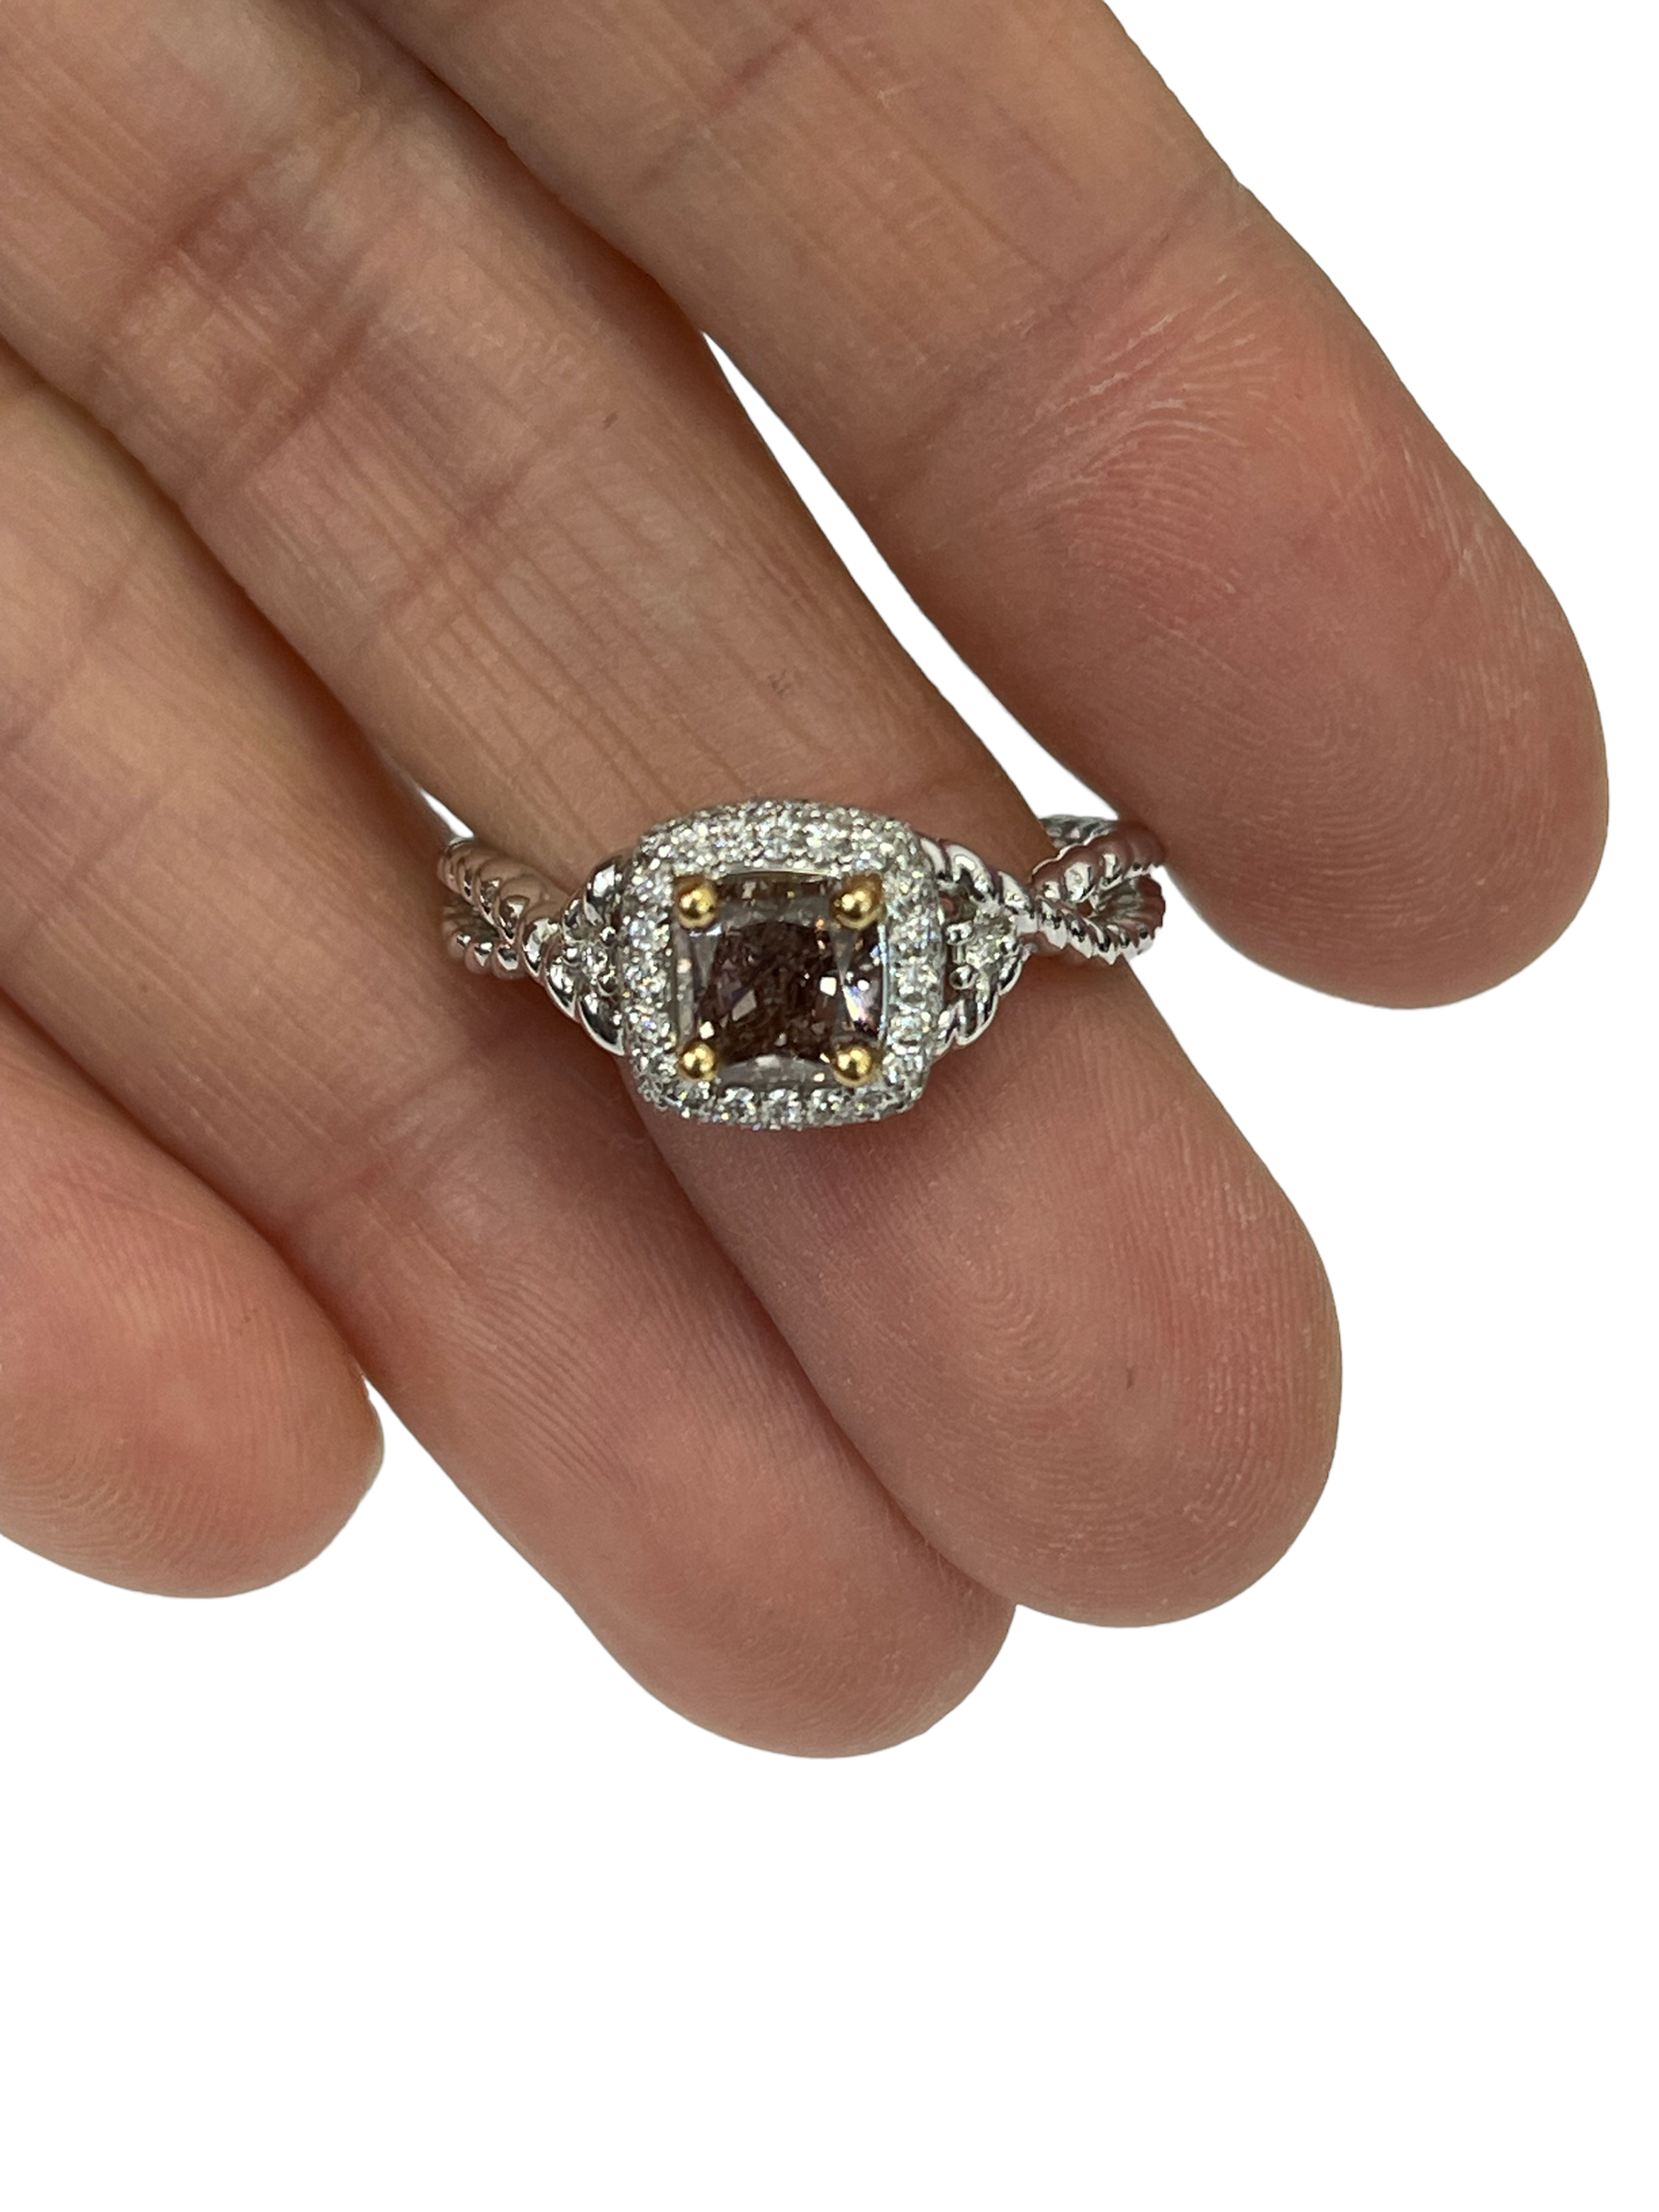 Fancy Dark Pinkish Brown Radiant Cut Diamond Ring GIA Certified